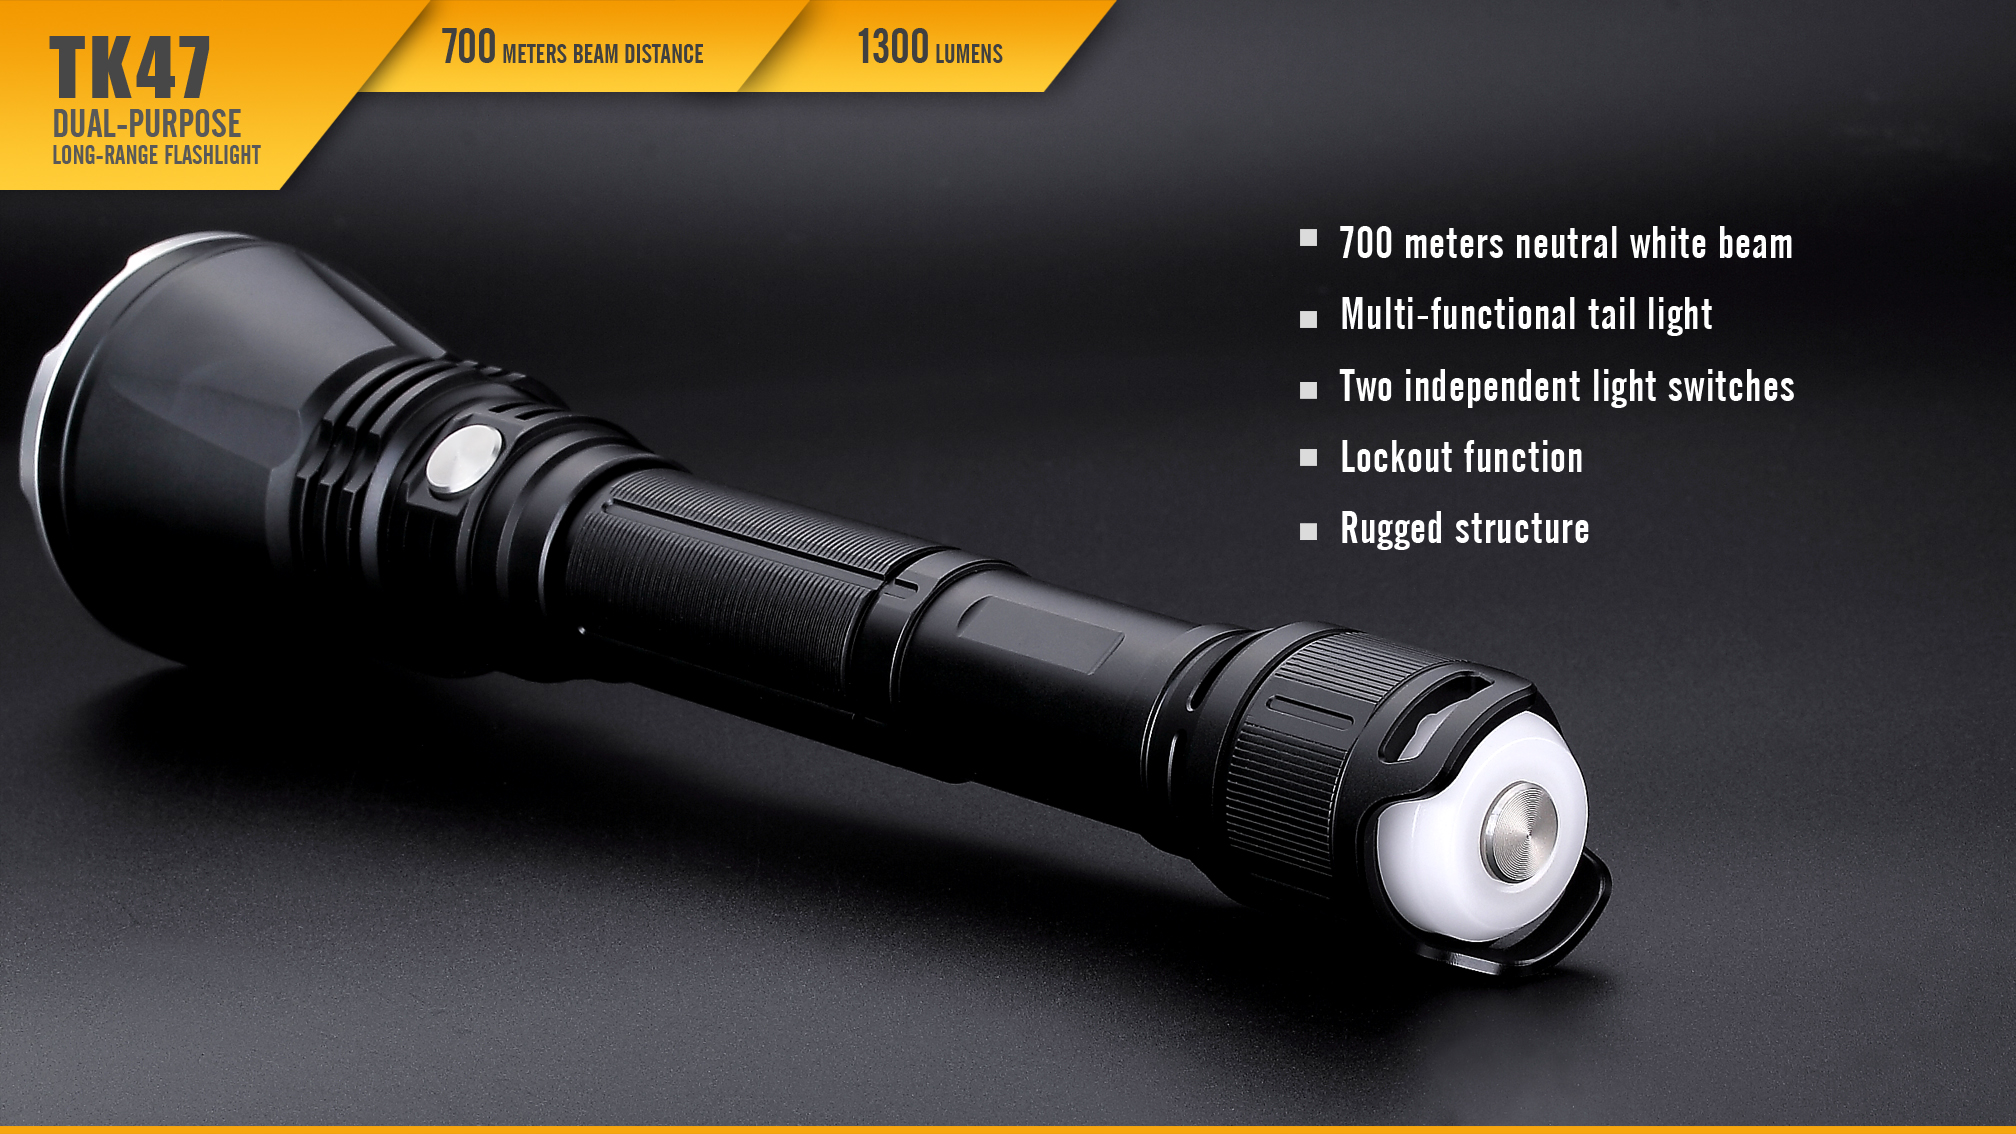 Fenix TK47 Dual-Purpose LED Flashlight Highlights